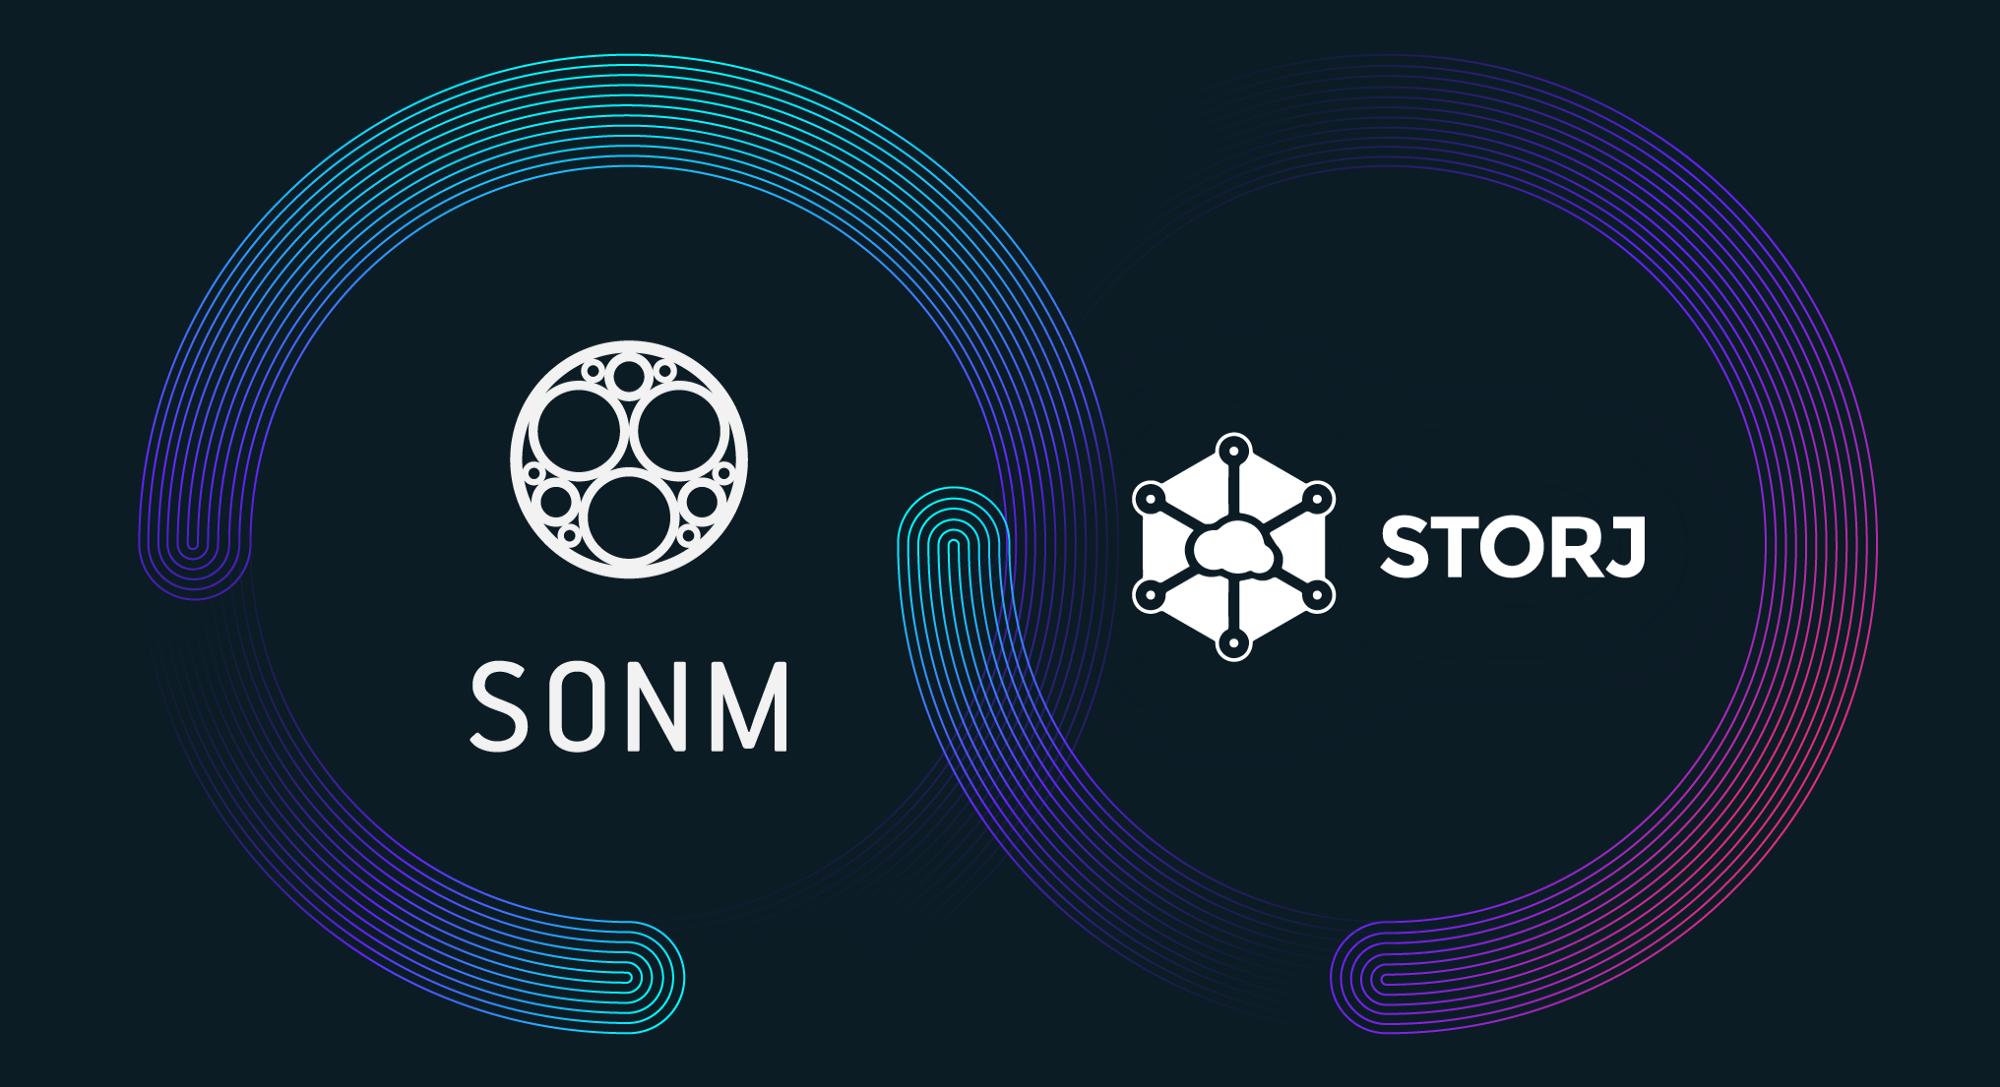 SONM partners with decentralized cloud storage platform Storj